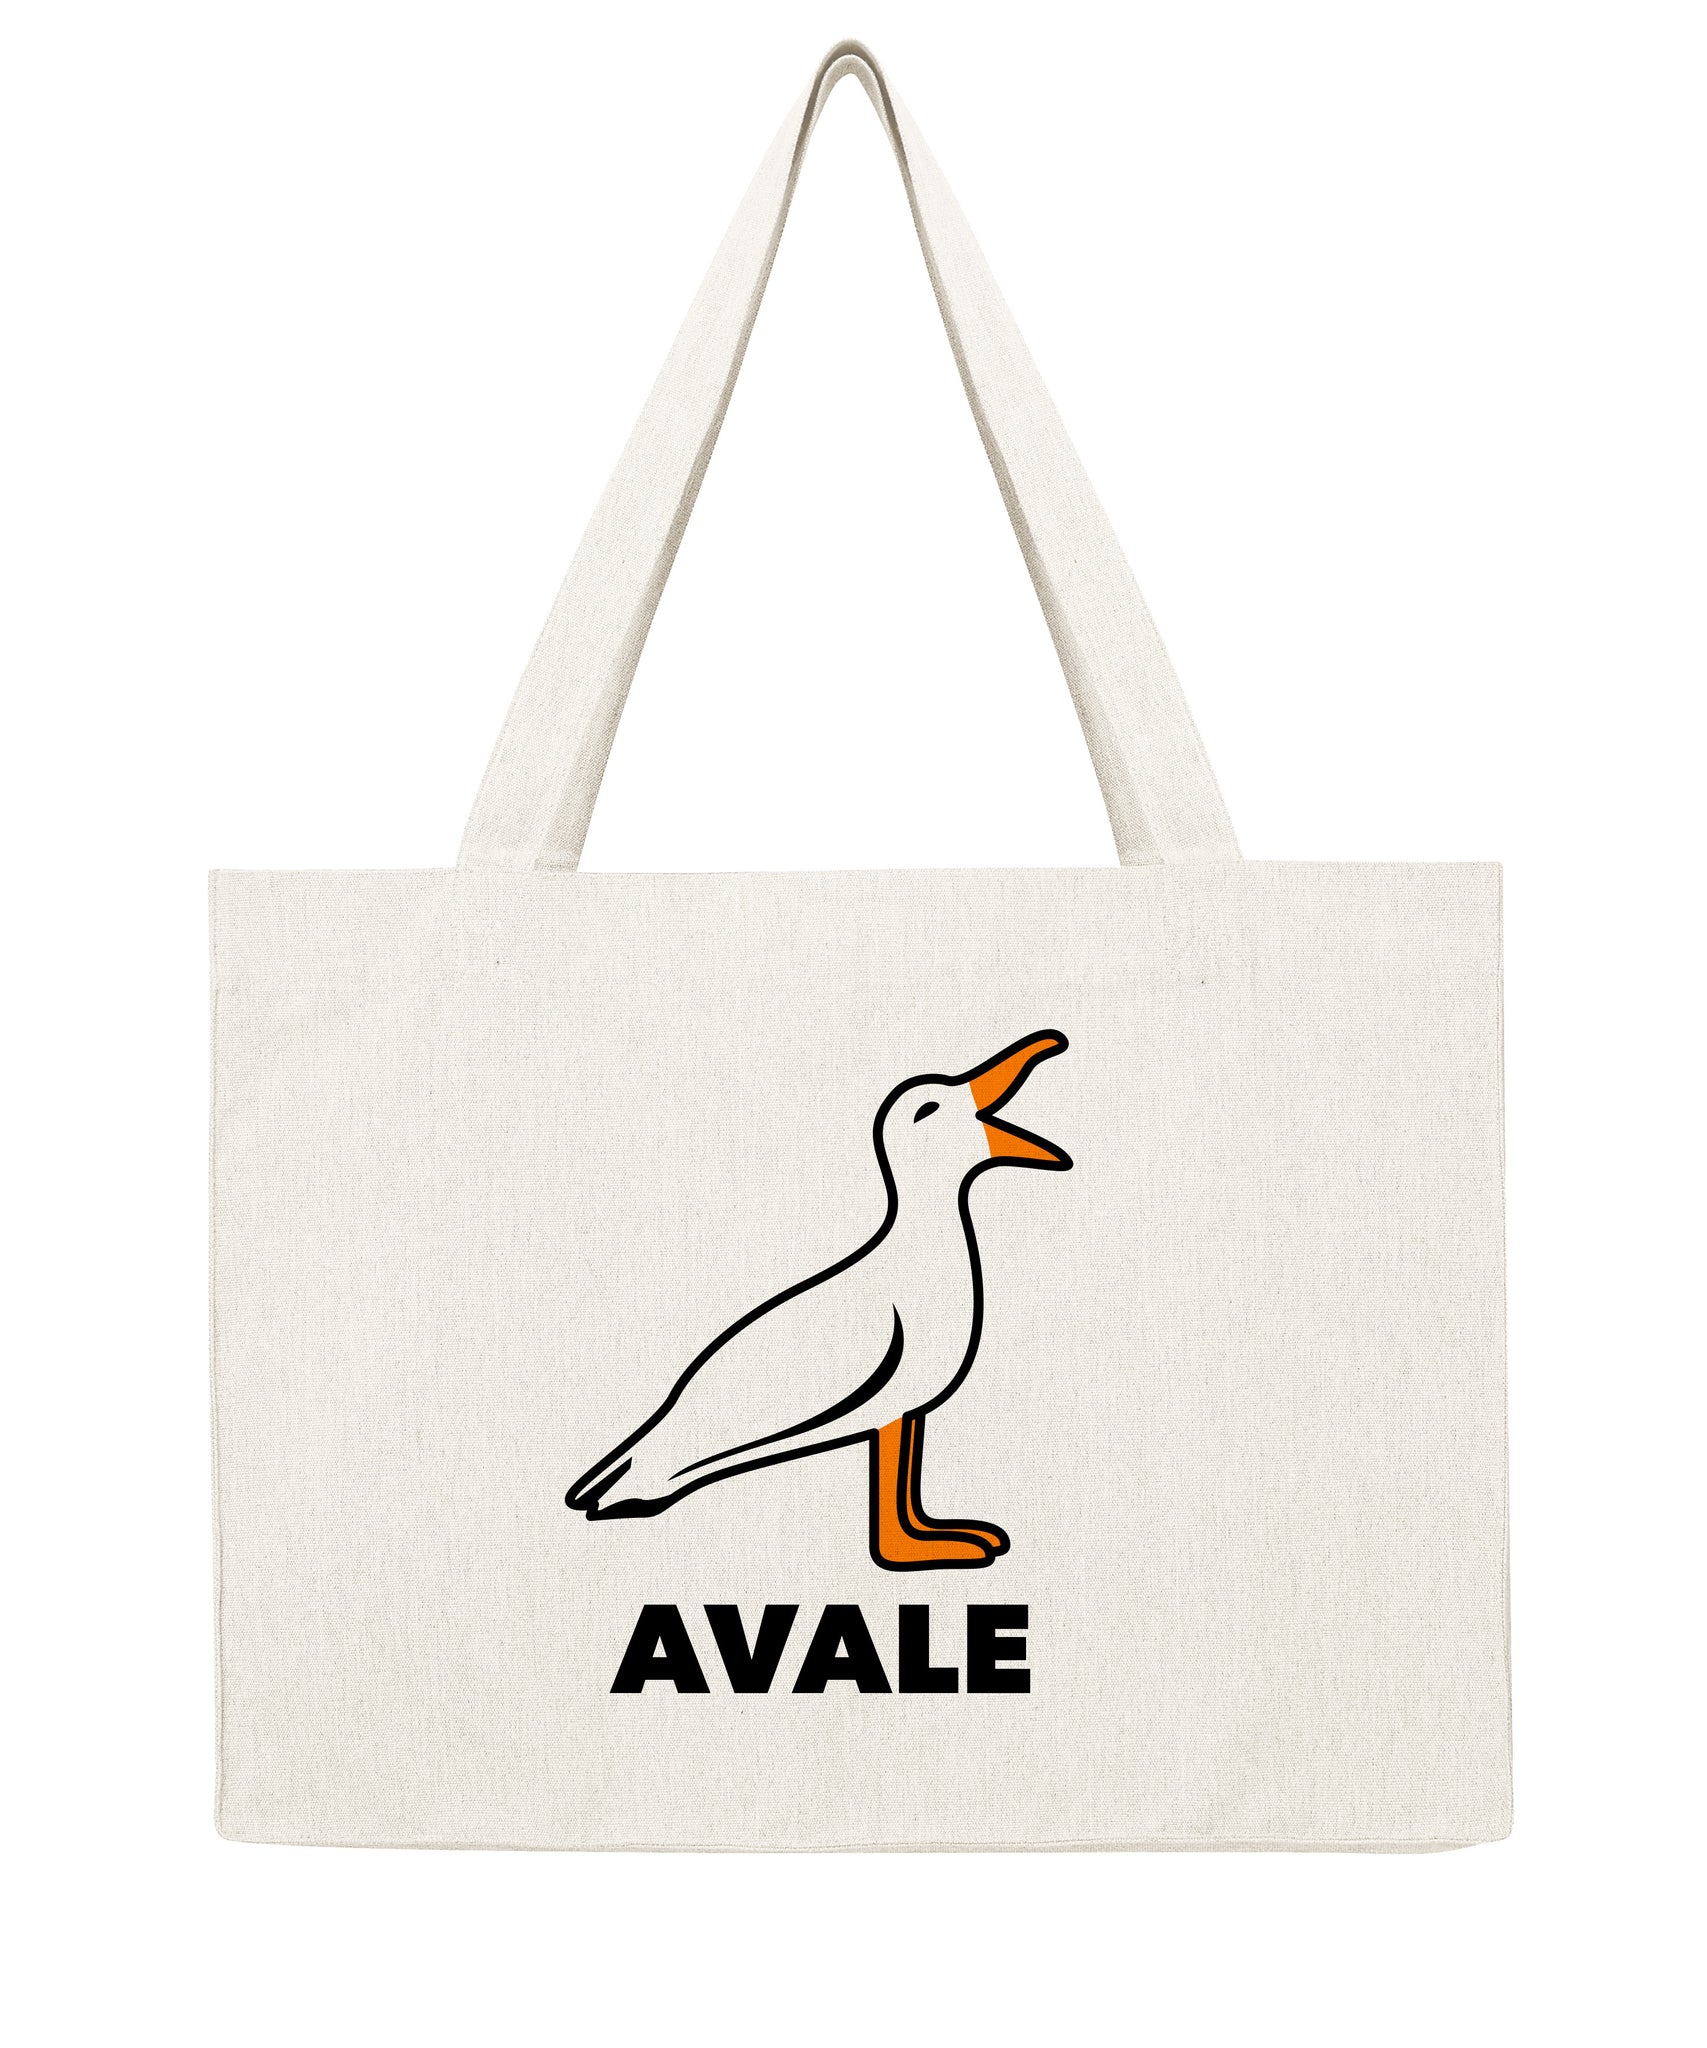 Avale - Shopping bag-Sacs-Atelier Amelot